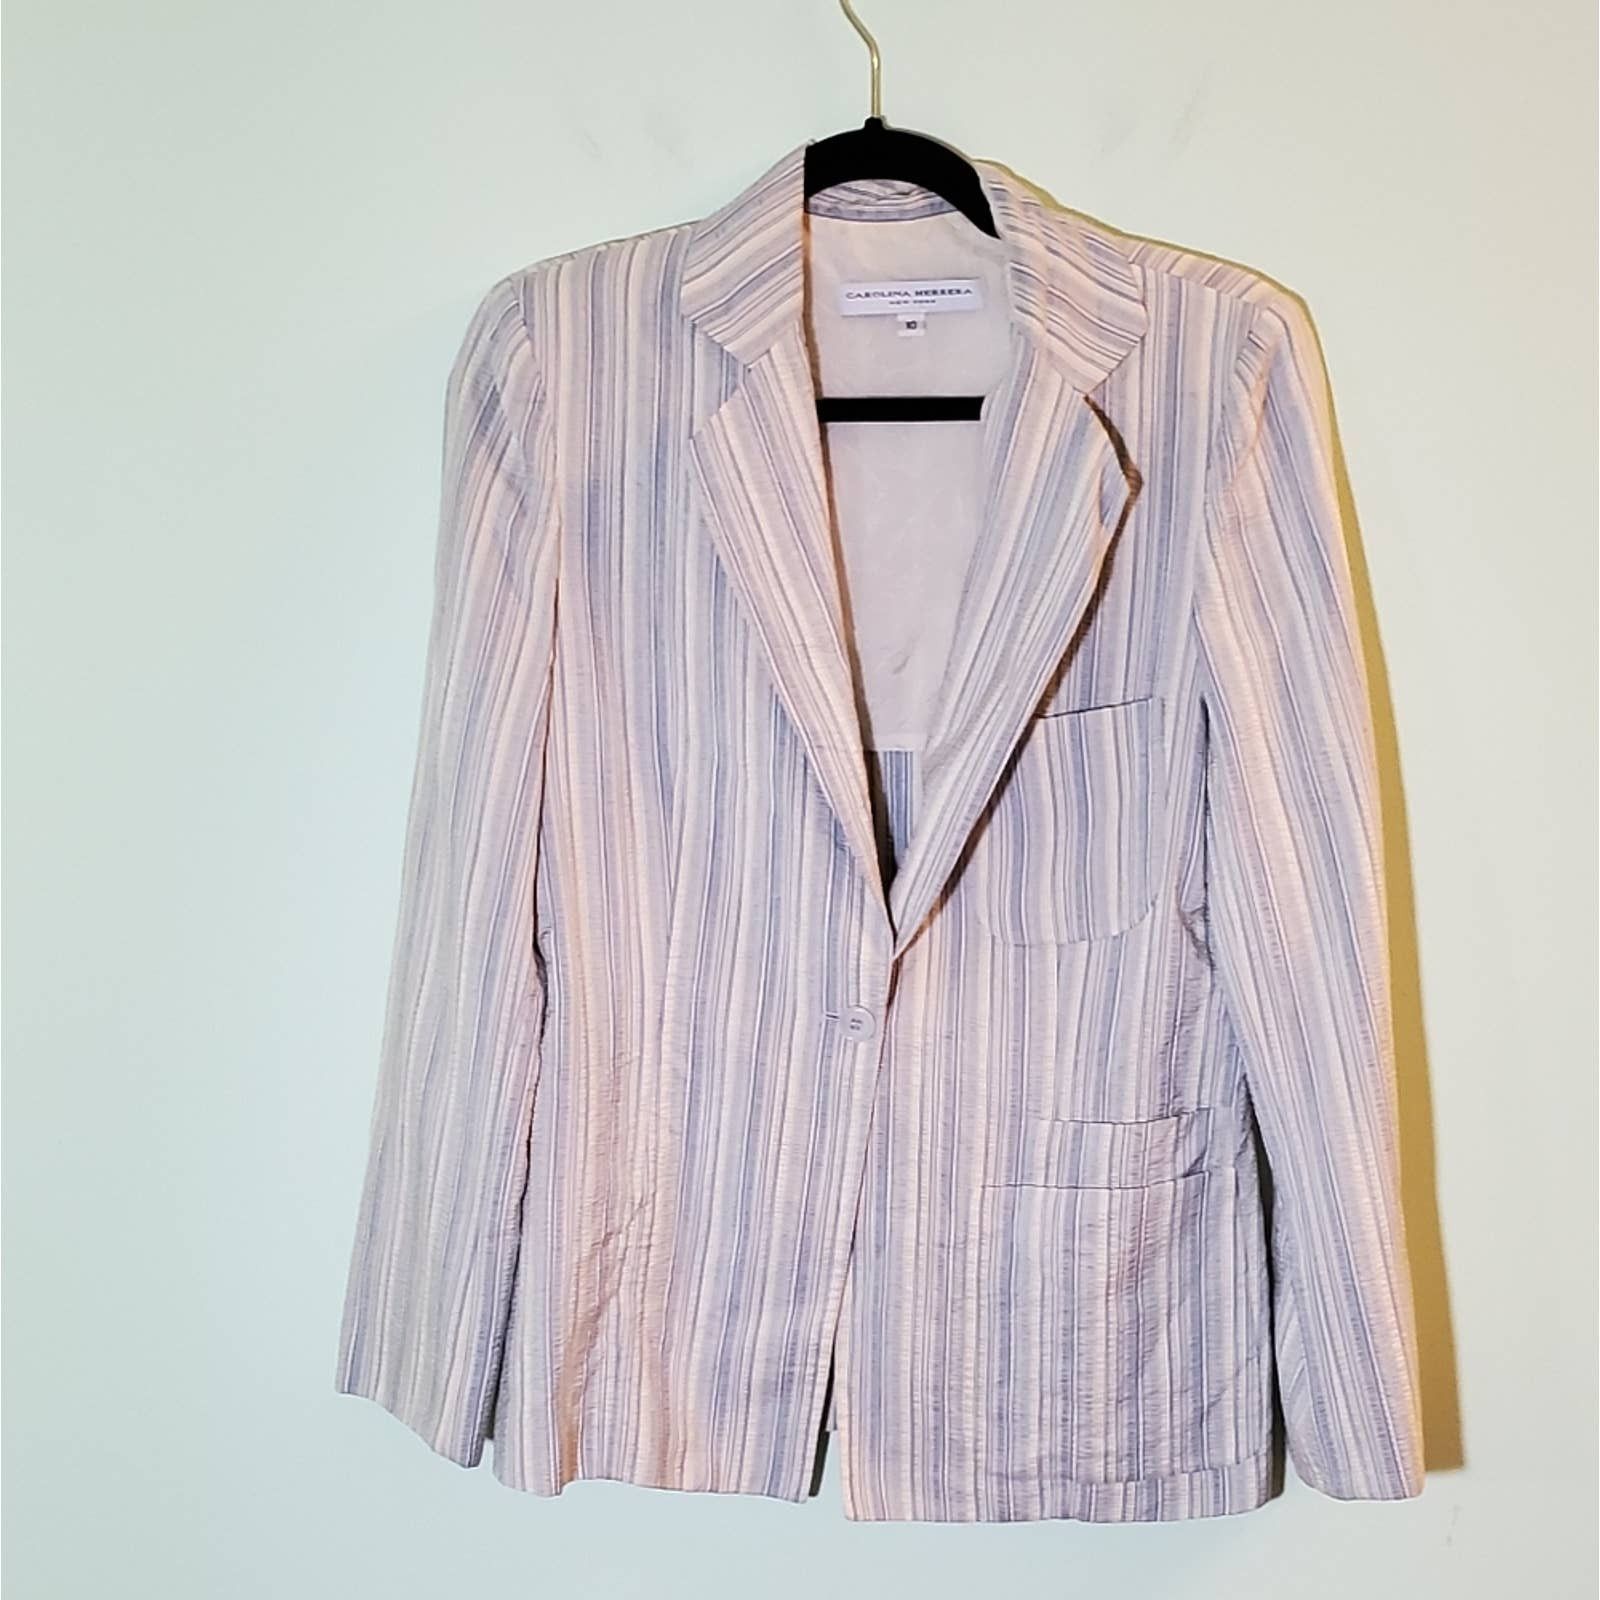 Carolina Herrera CAROLINA HERRERA Striped Blazer Perfect for Work Casual Chic Size L / US 10 / IT 46 - 4 Thumbnail